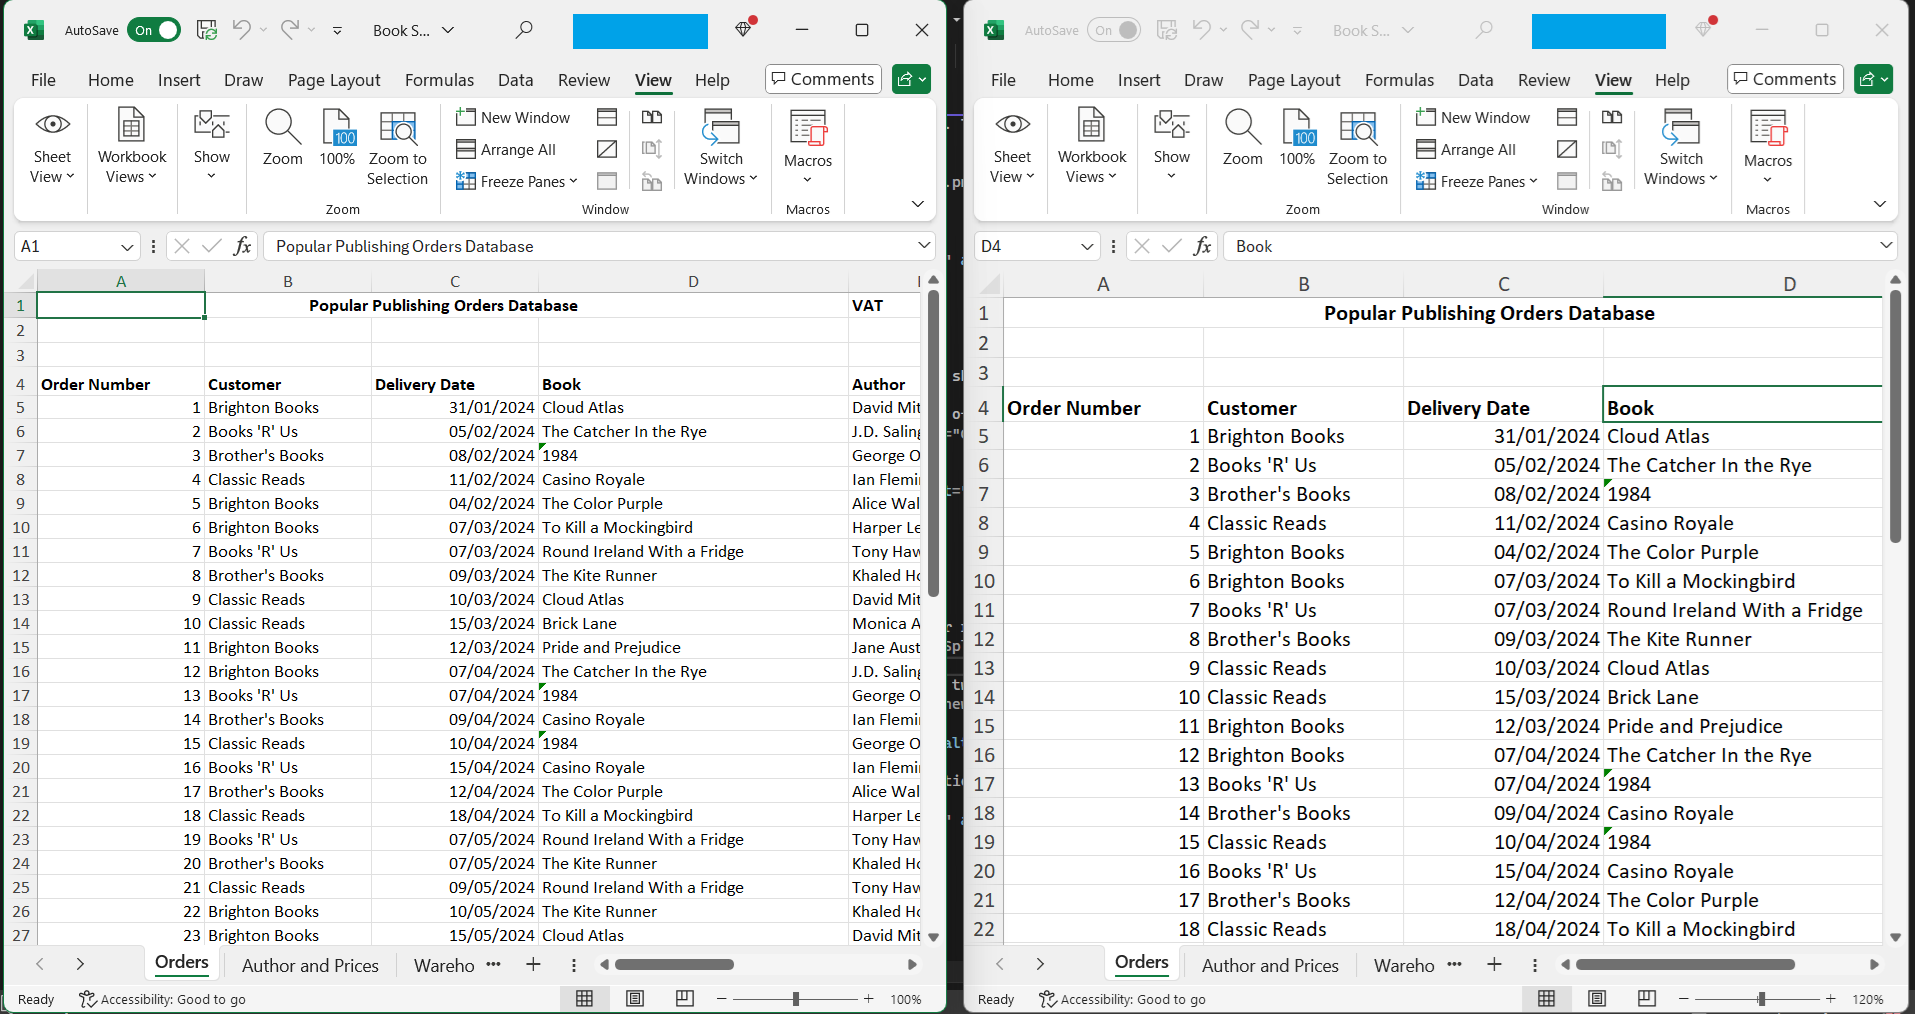 Two worksheet windows open in Excel